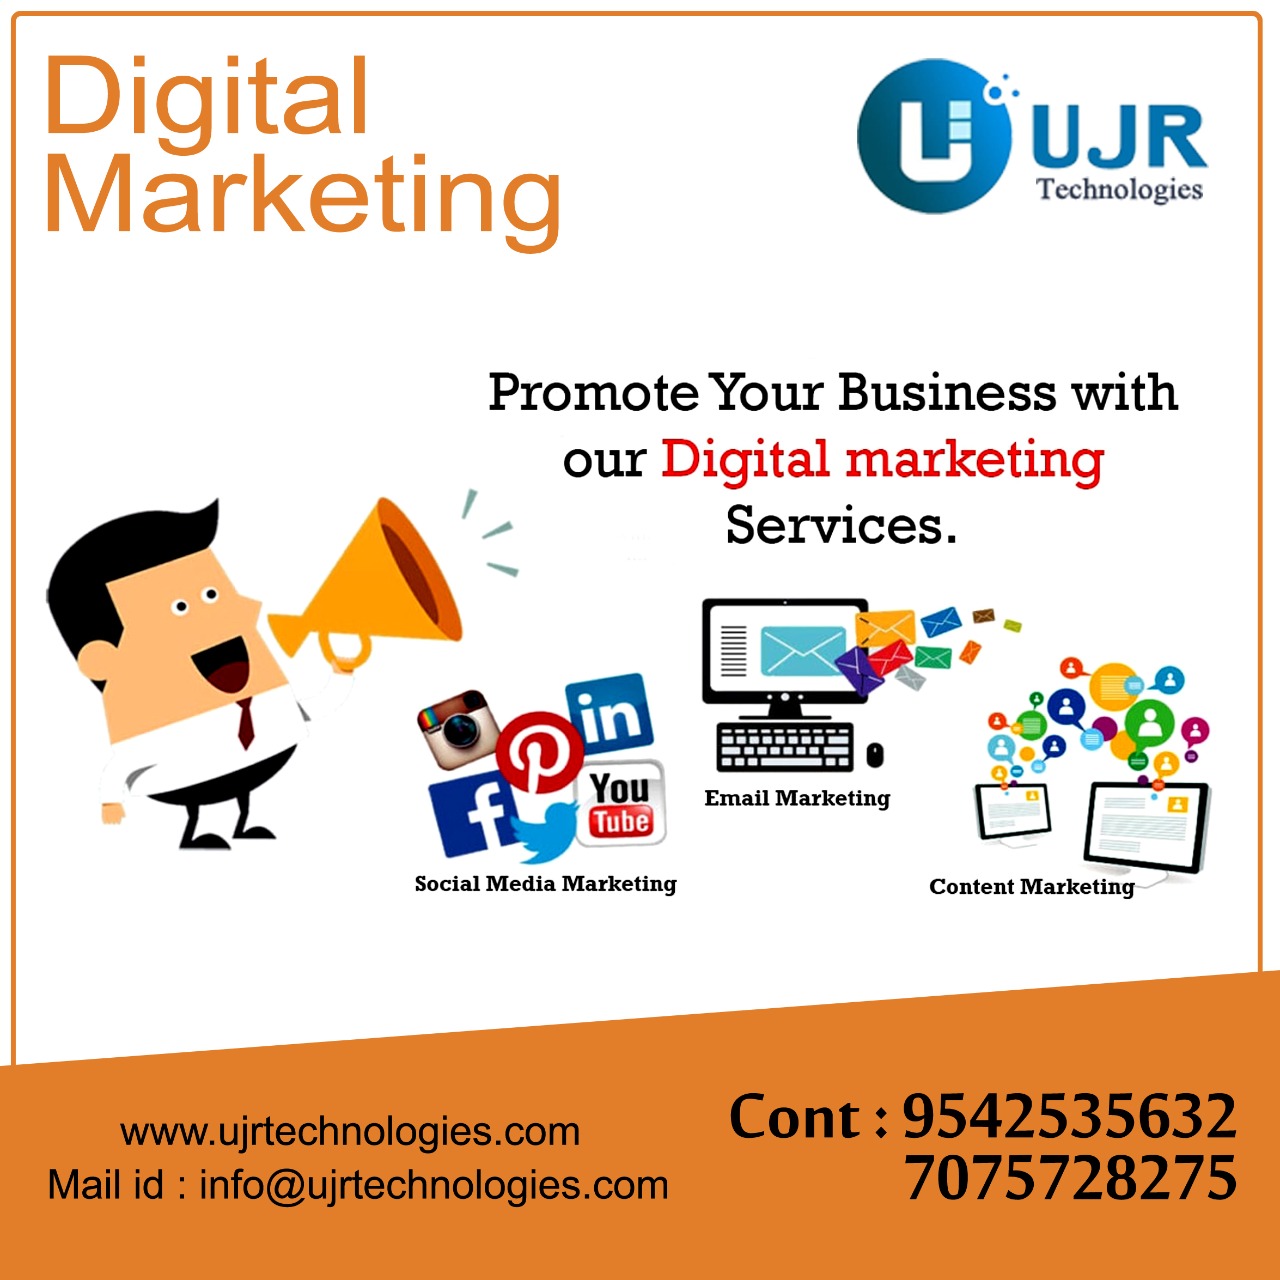 Digital Marketing Services in KPHB